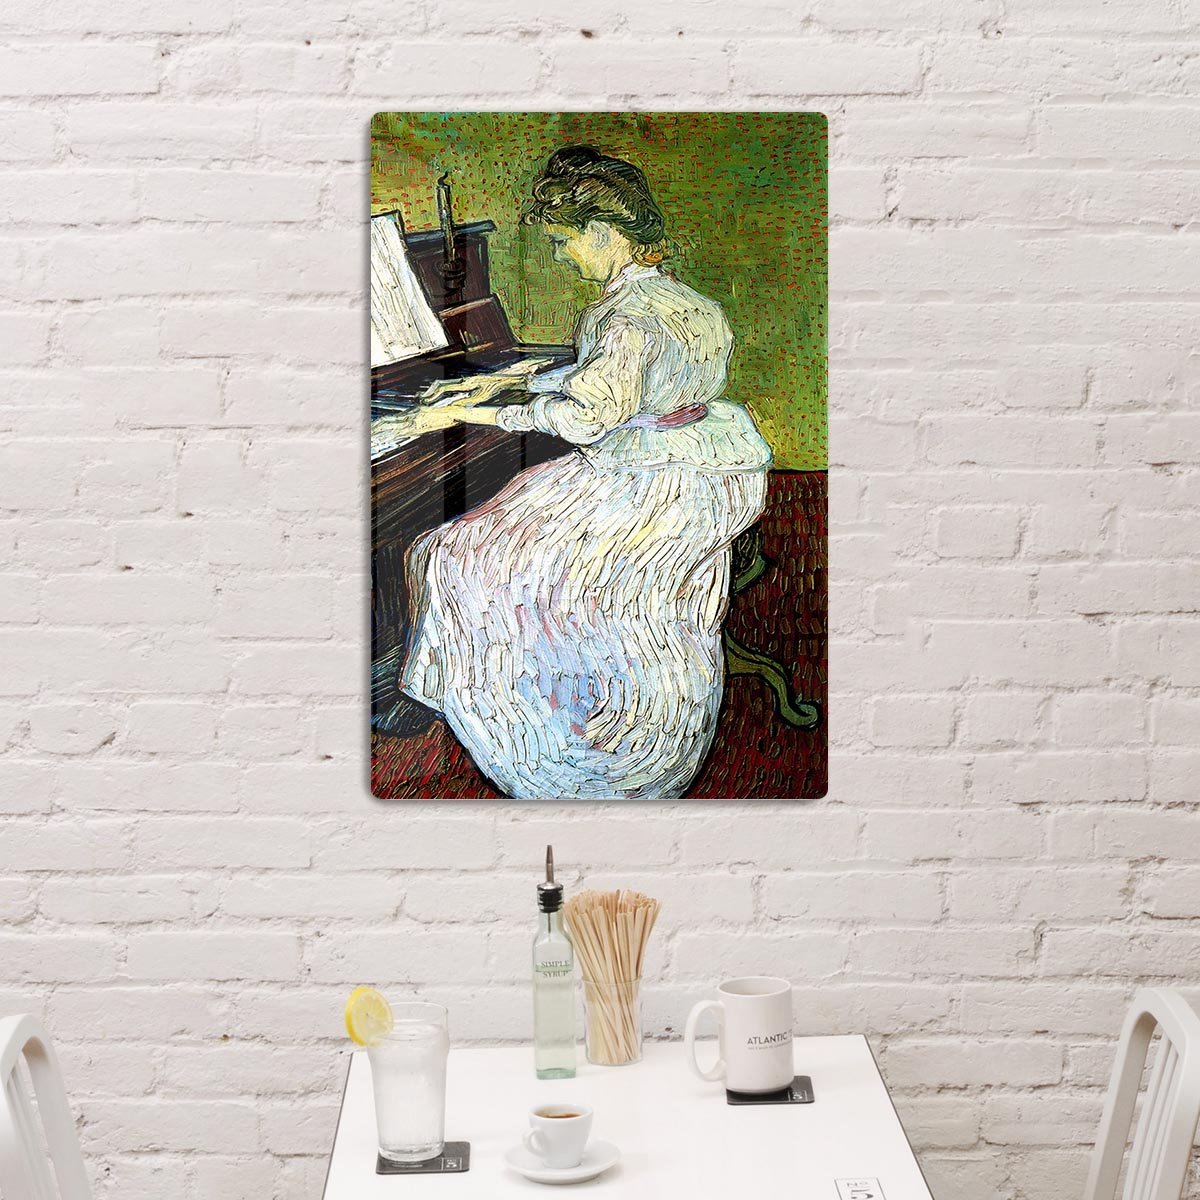 Marguerite Gachet at the Piano by Van Gogh HD Metal Print